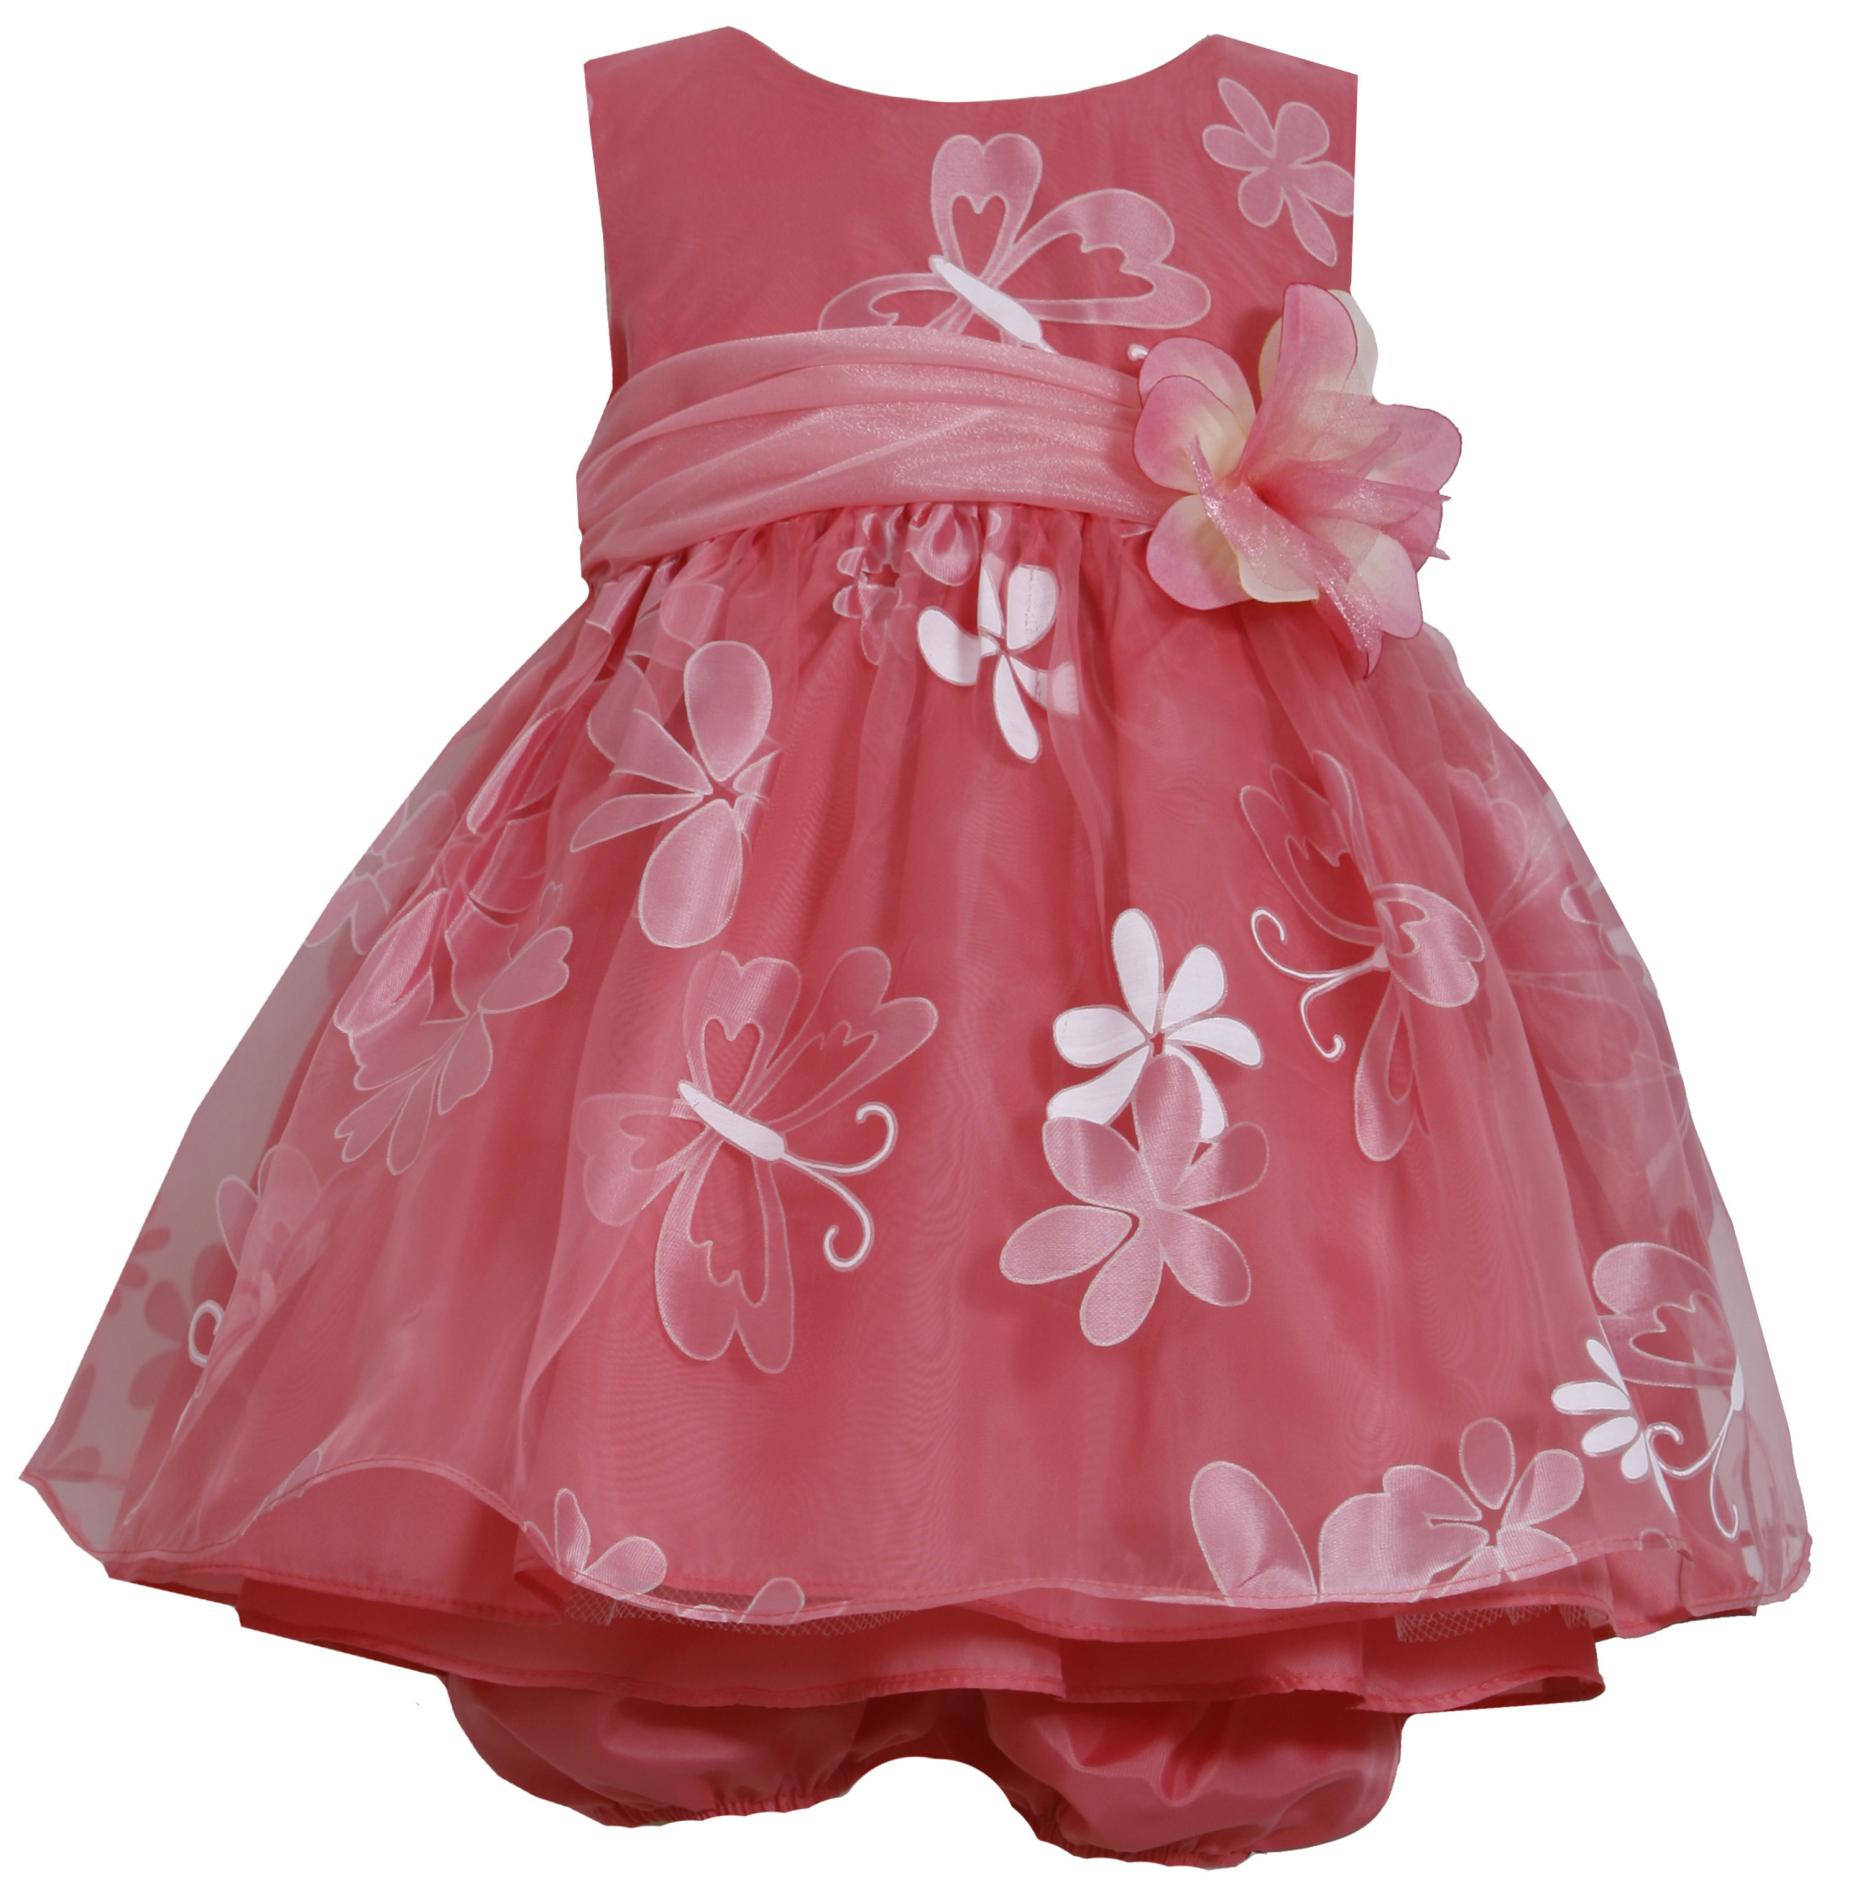 Ashley Ann Newborn Girl's Spring Party Dress